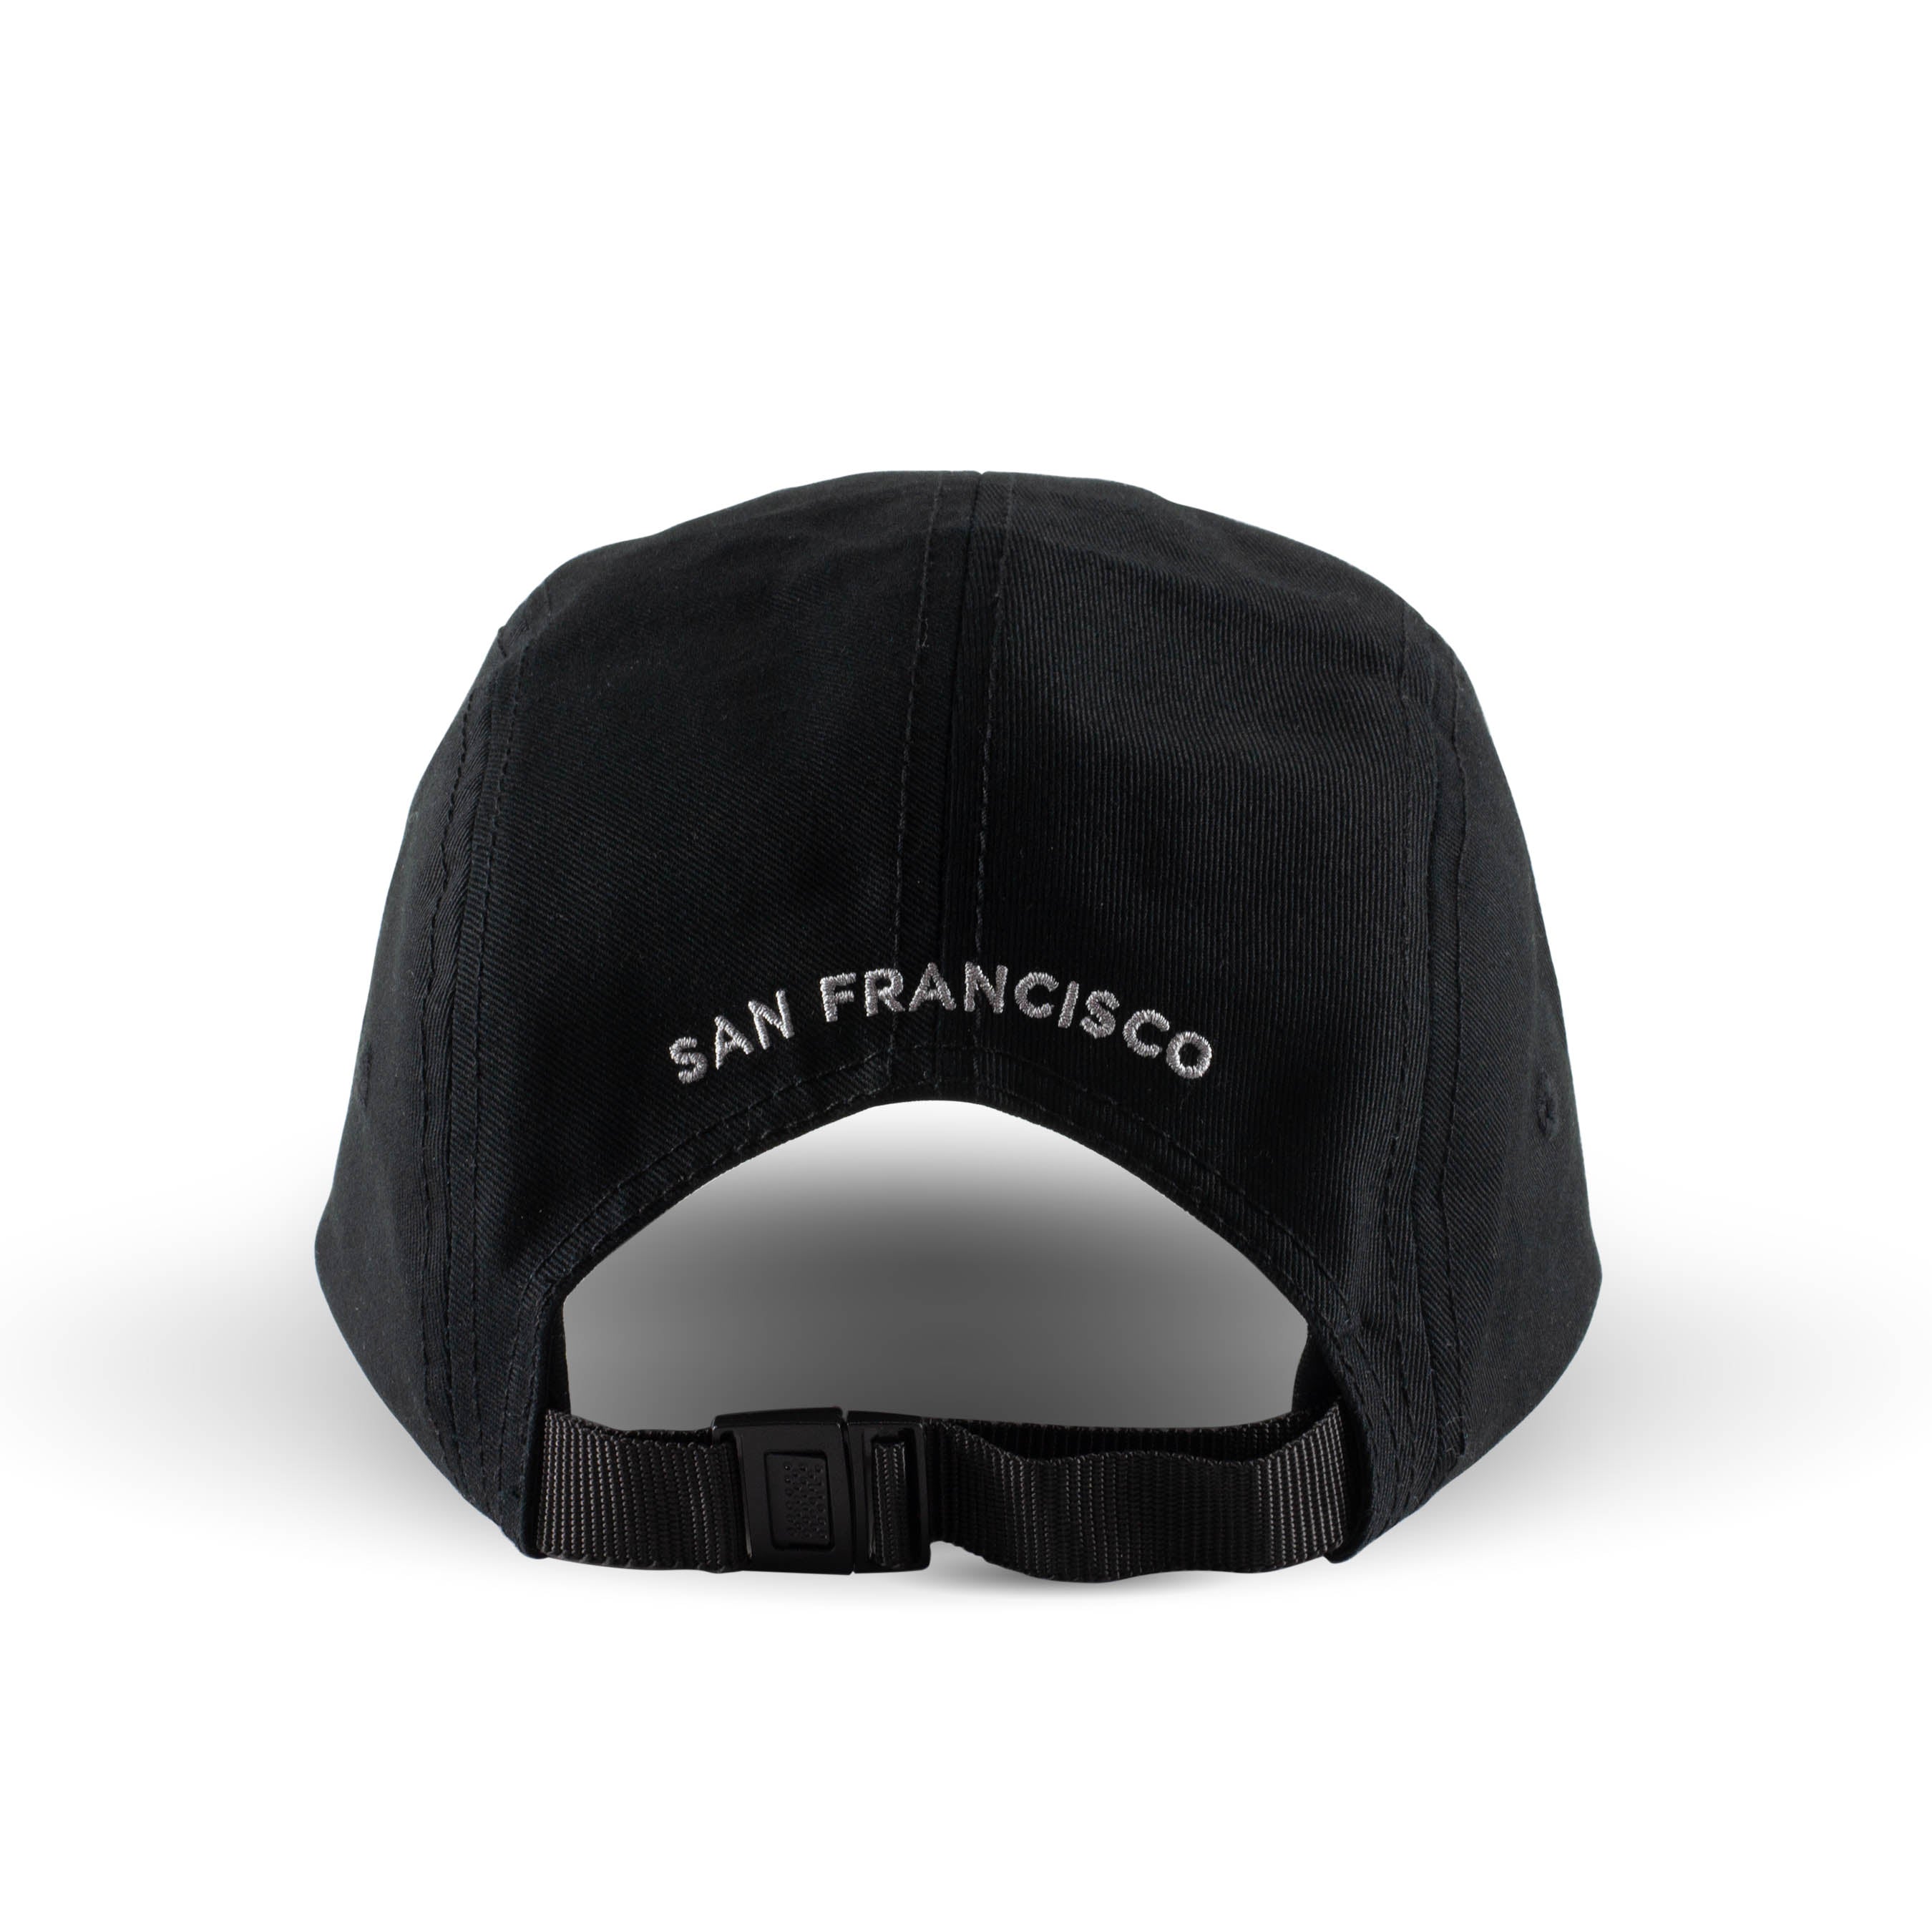 Baseball Cap - San Francisco Skyline